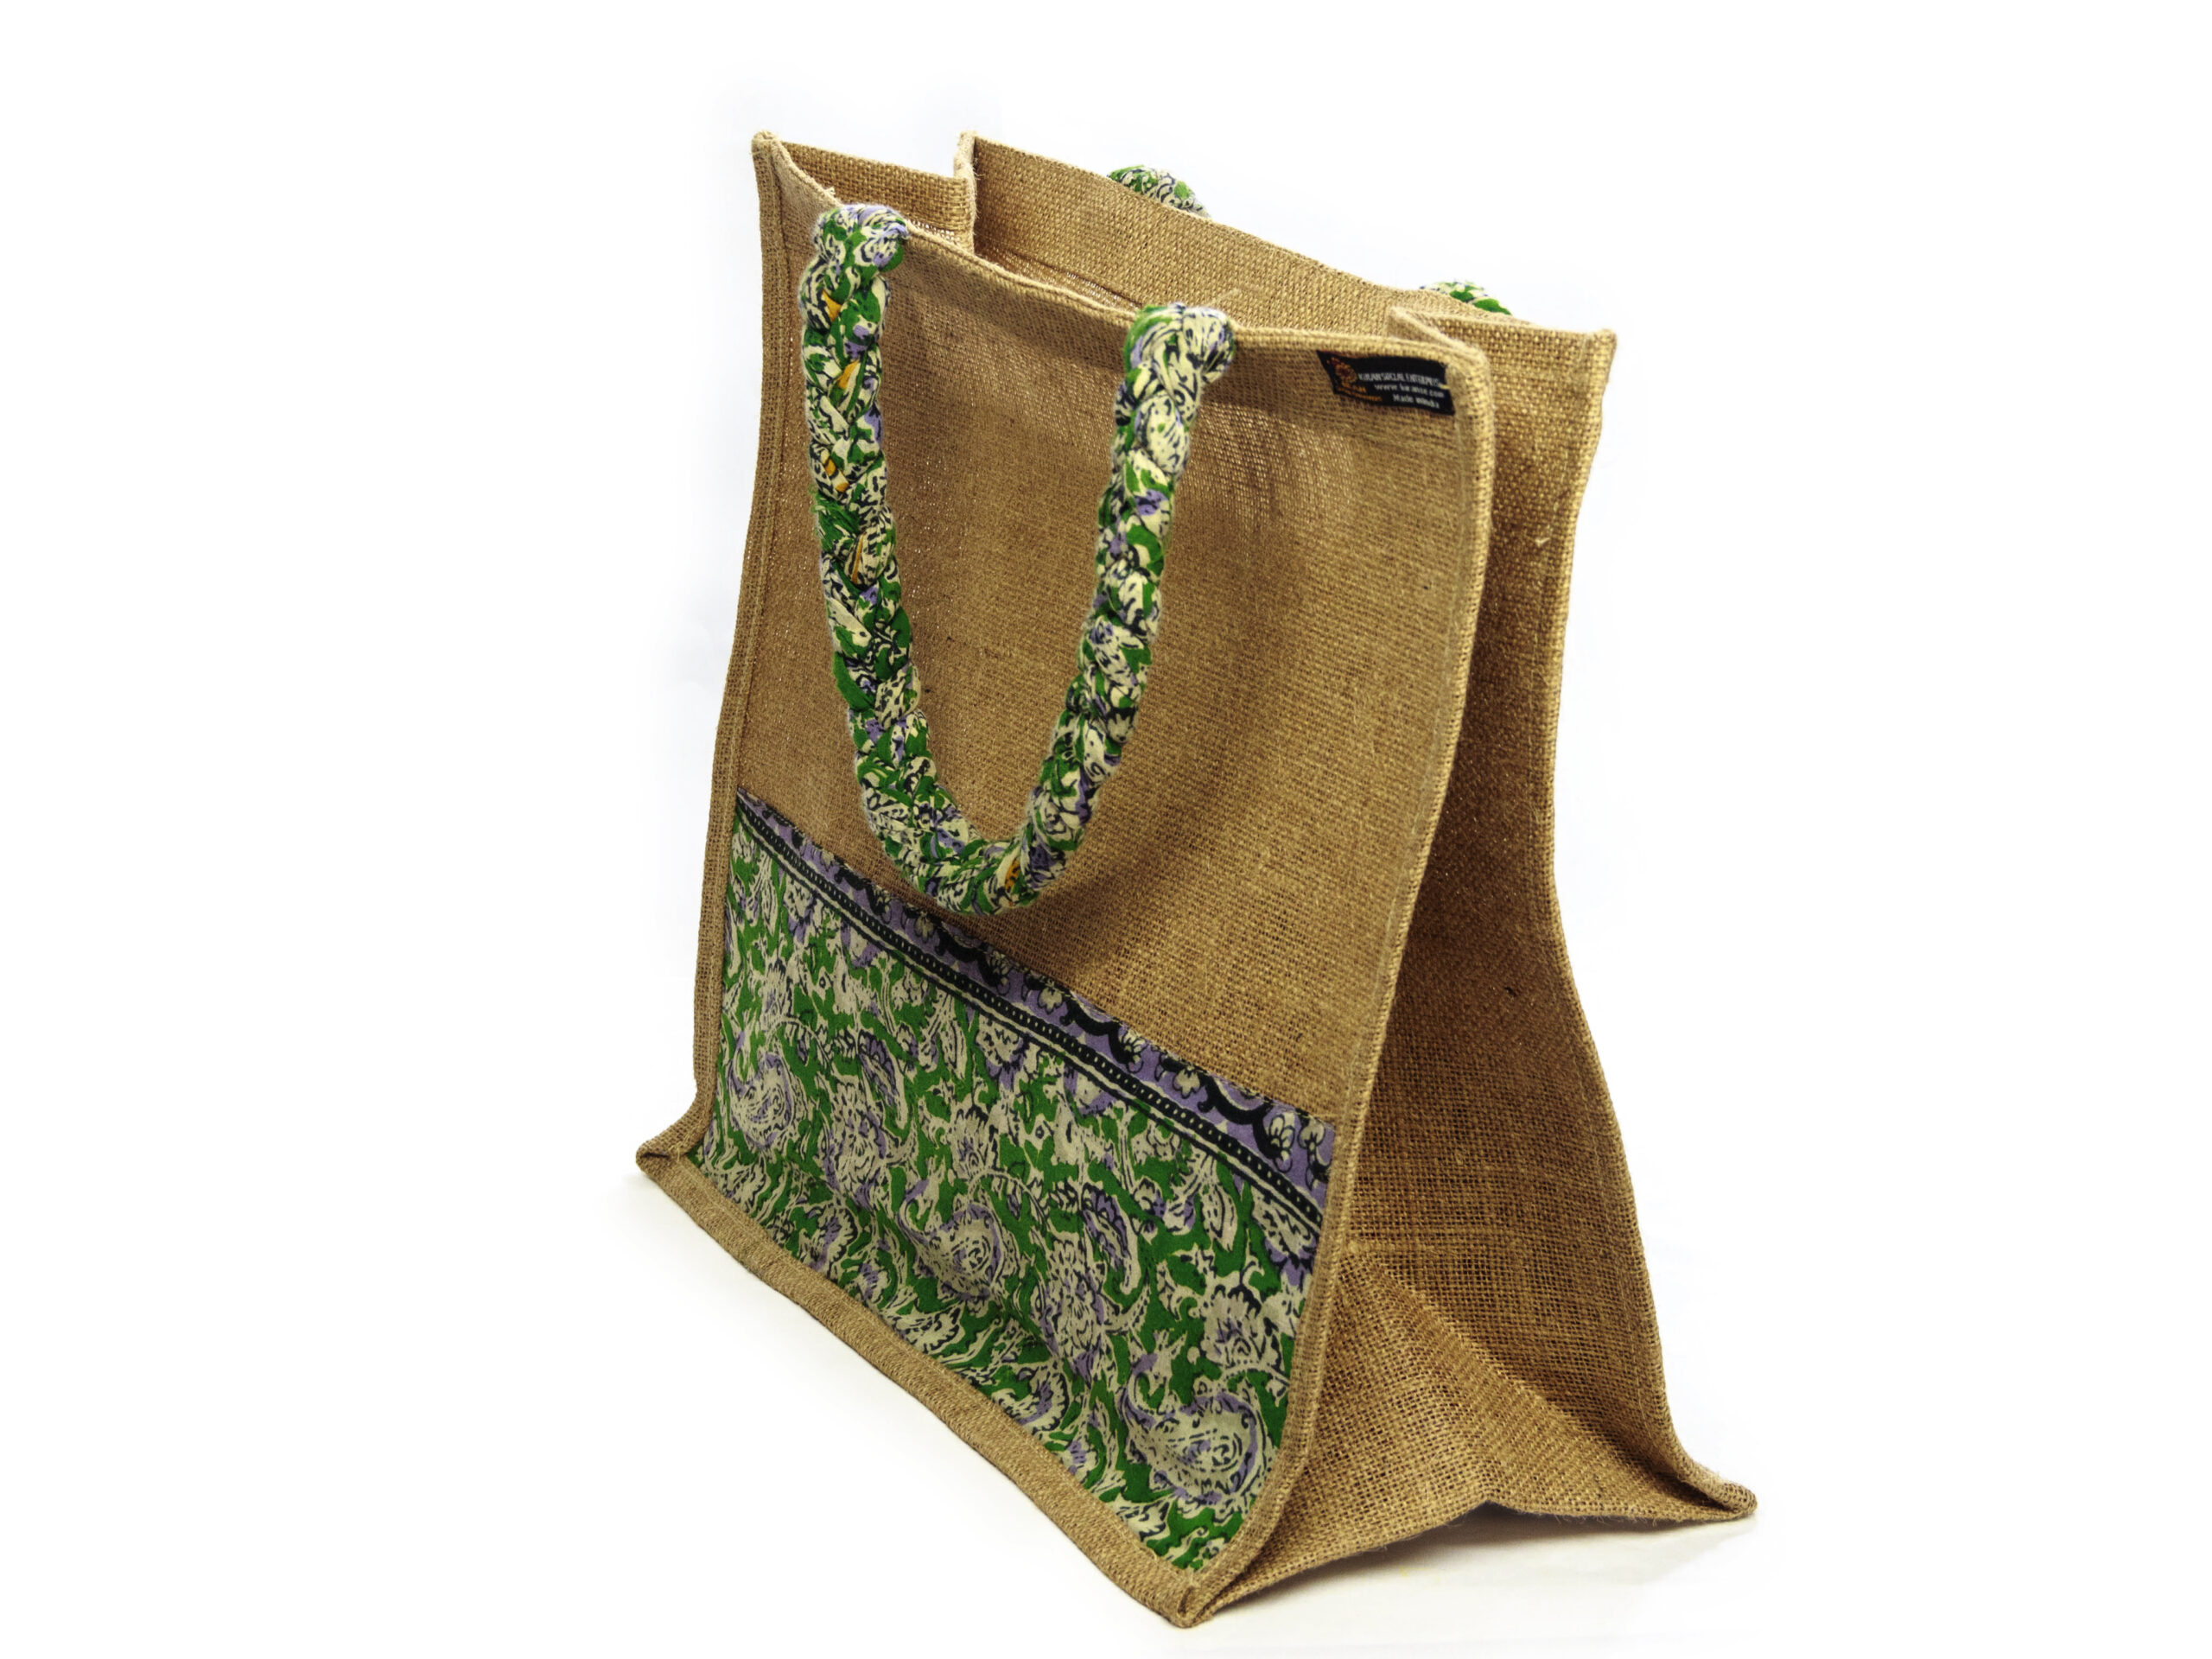 Jute Bag 60x110cm (Biodegradable) - The ideal gardenbag